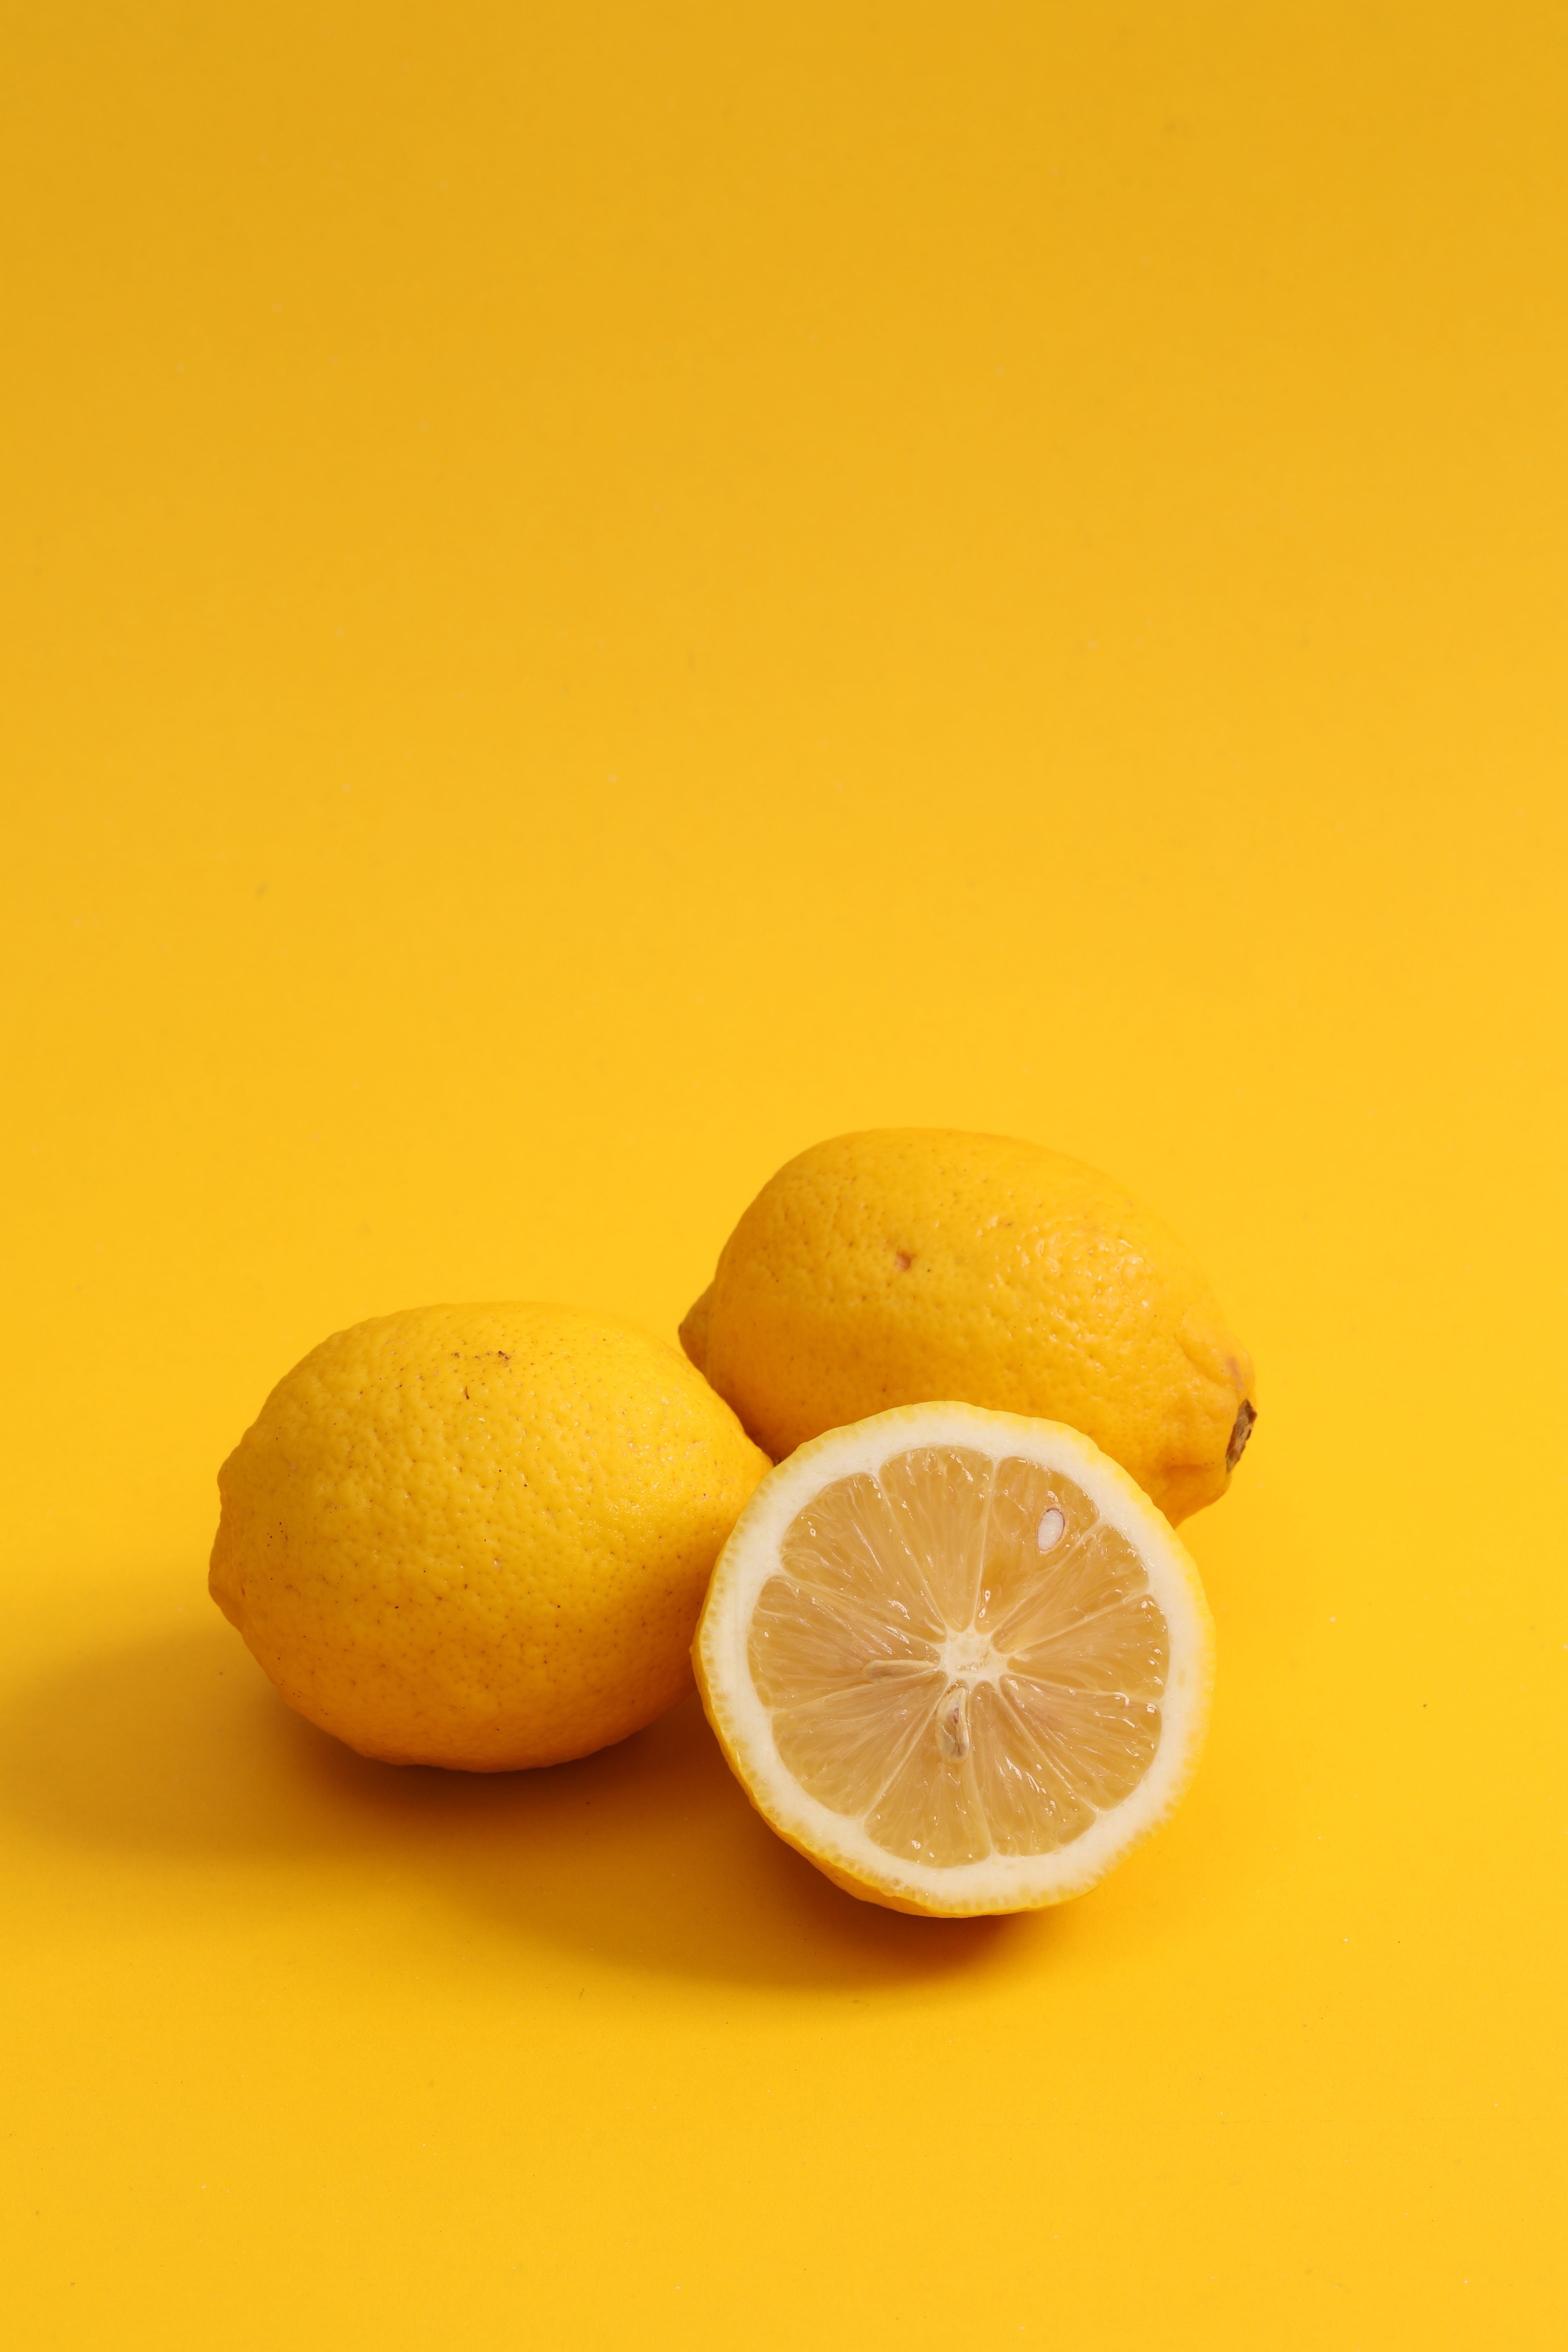 Yellow Lemon Fruits on Yellow Surface · Free